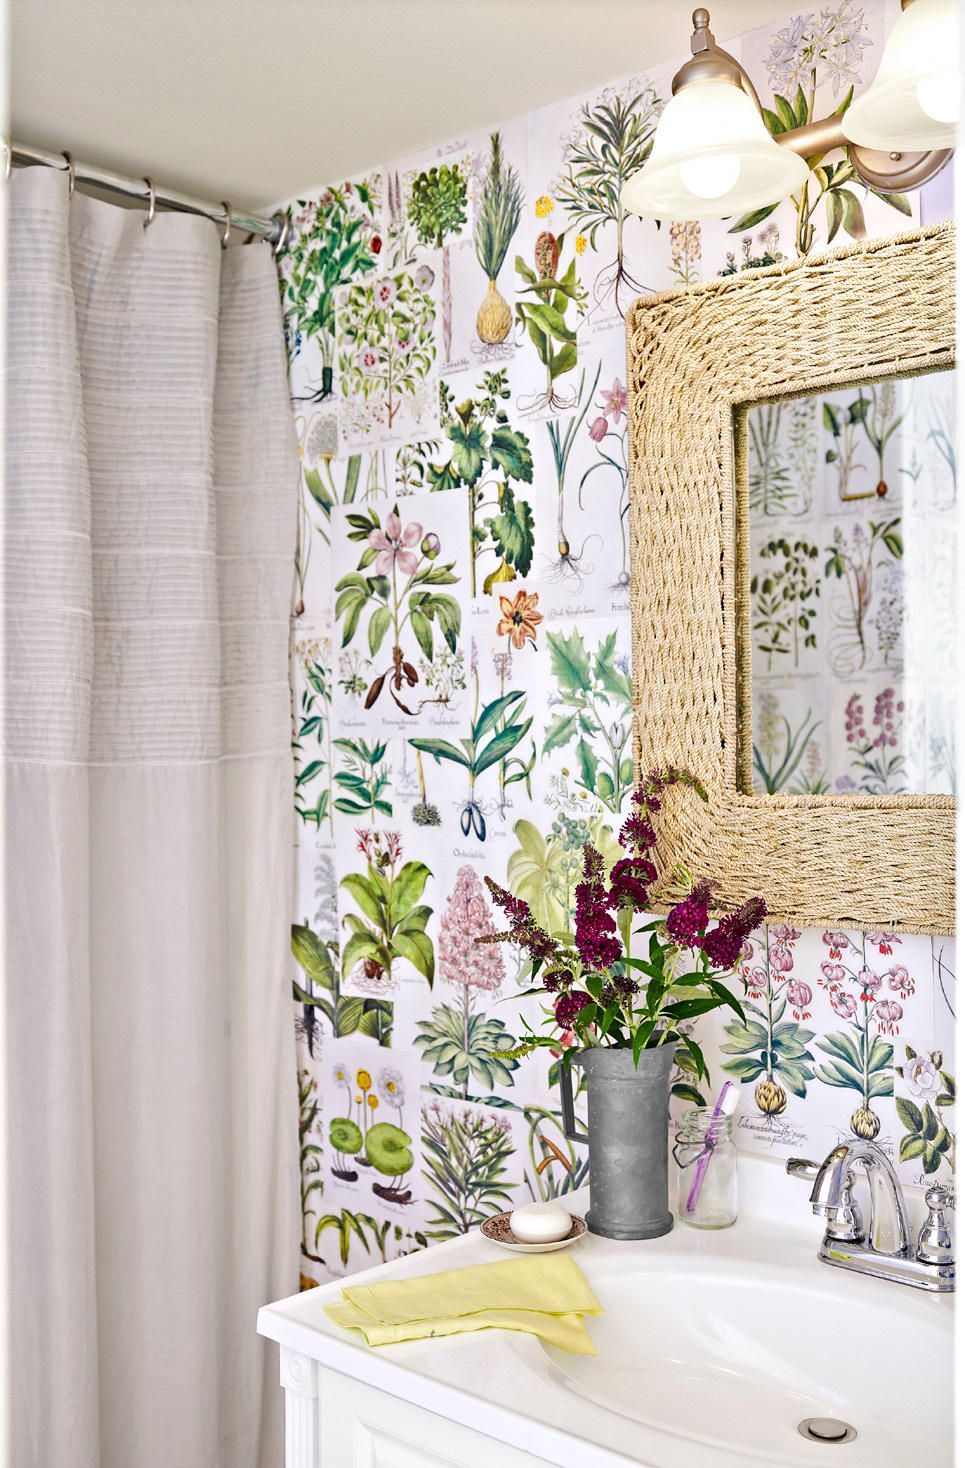 55 Bathroom Decorating Ideas Pictures, Guest Bathroom Shower Curtain Ideas